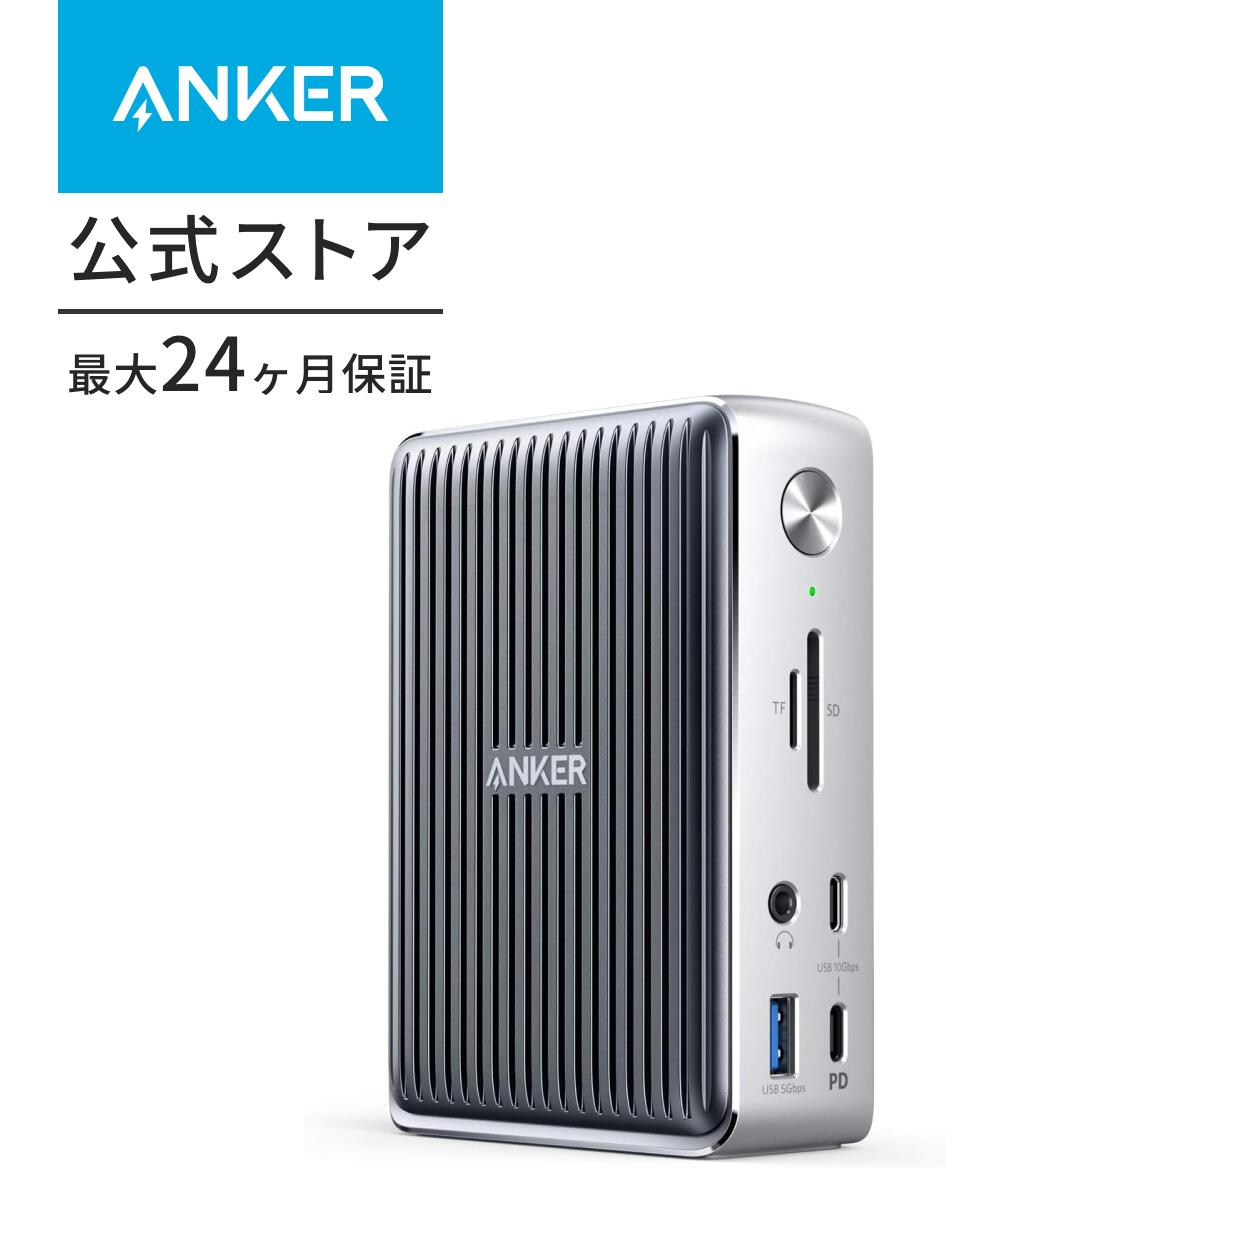 Anker PowerExpand Elite 13-in-1 Thunderbolt 3 Dock ドッキングステーション 85W出力 USB Power Delivery 対応 USB-Cデータ 充電ポート USB-Aポート 4K対応 HDMIポート